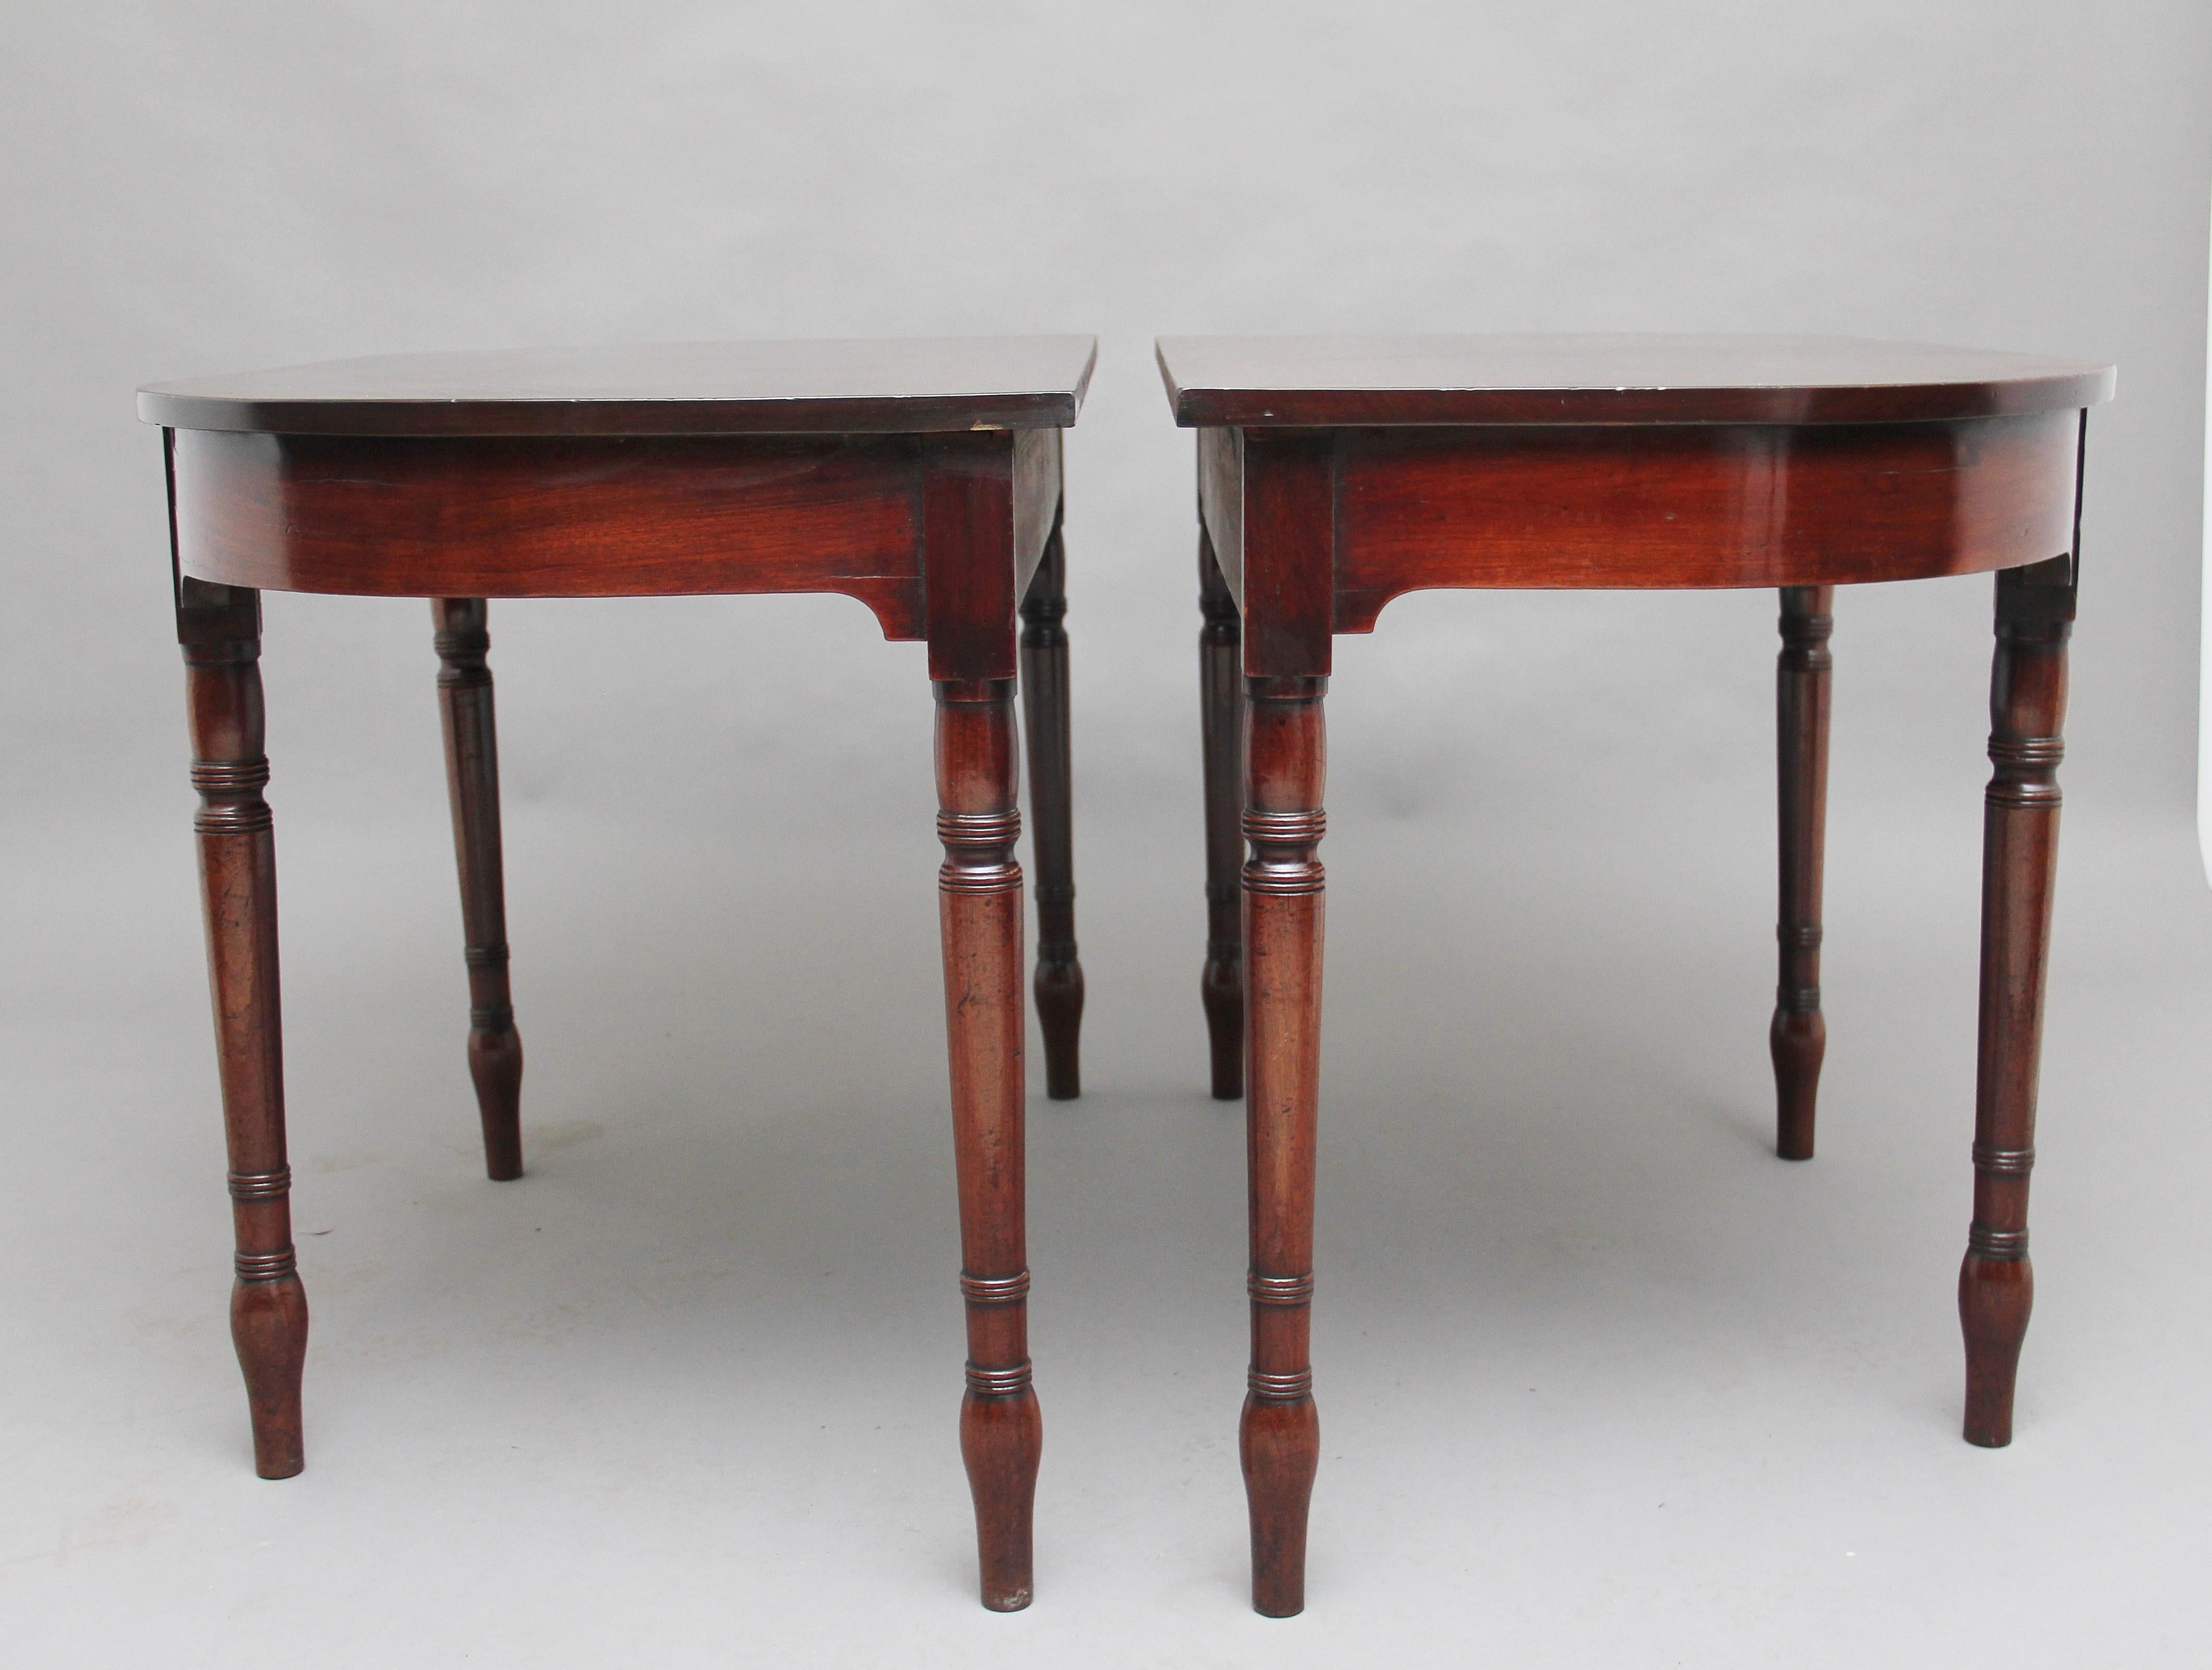 Regency Pair of Early 19th Century Mahogany Console Tables